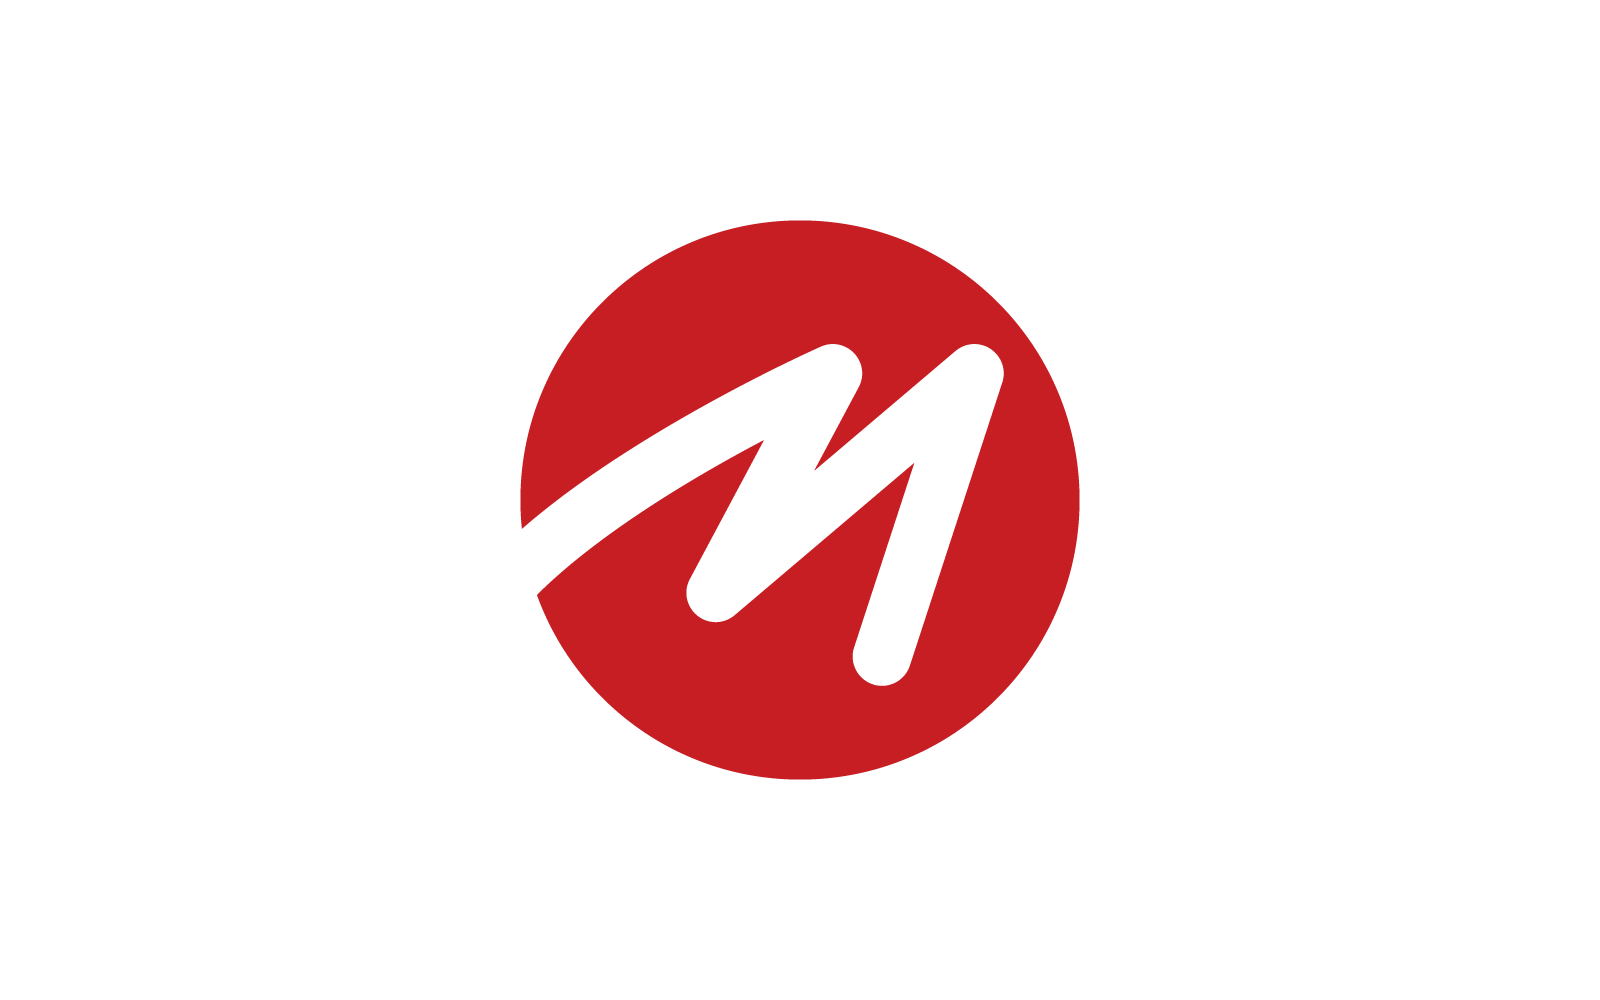 M or N Letter logo business design template